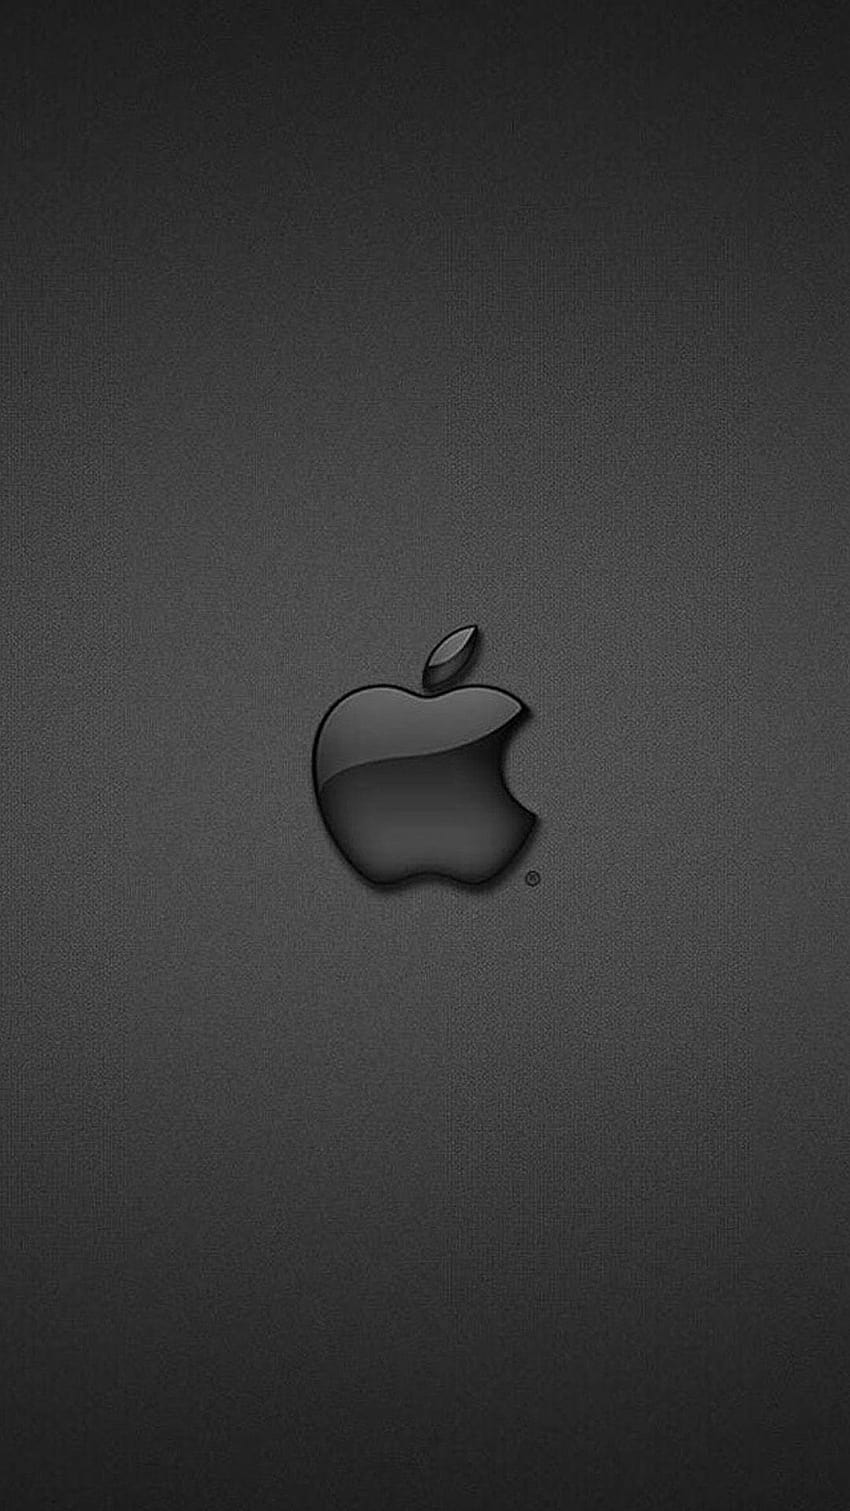 Apple Logo LG G2 299, LG G2 , LG, black apple logo 1080 HD phone wallpaper